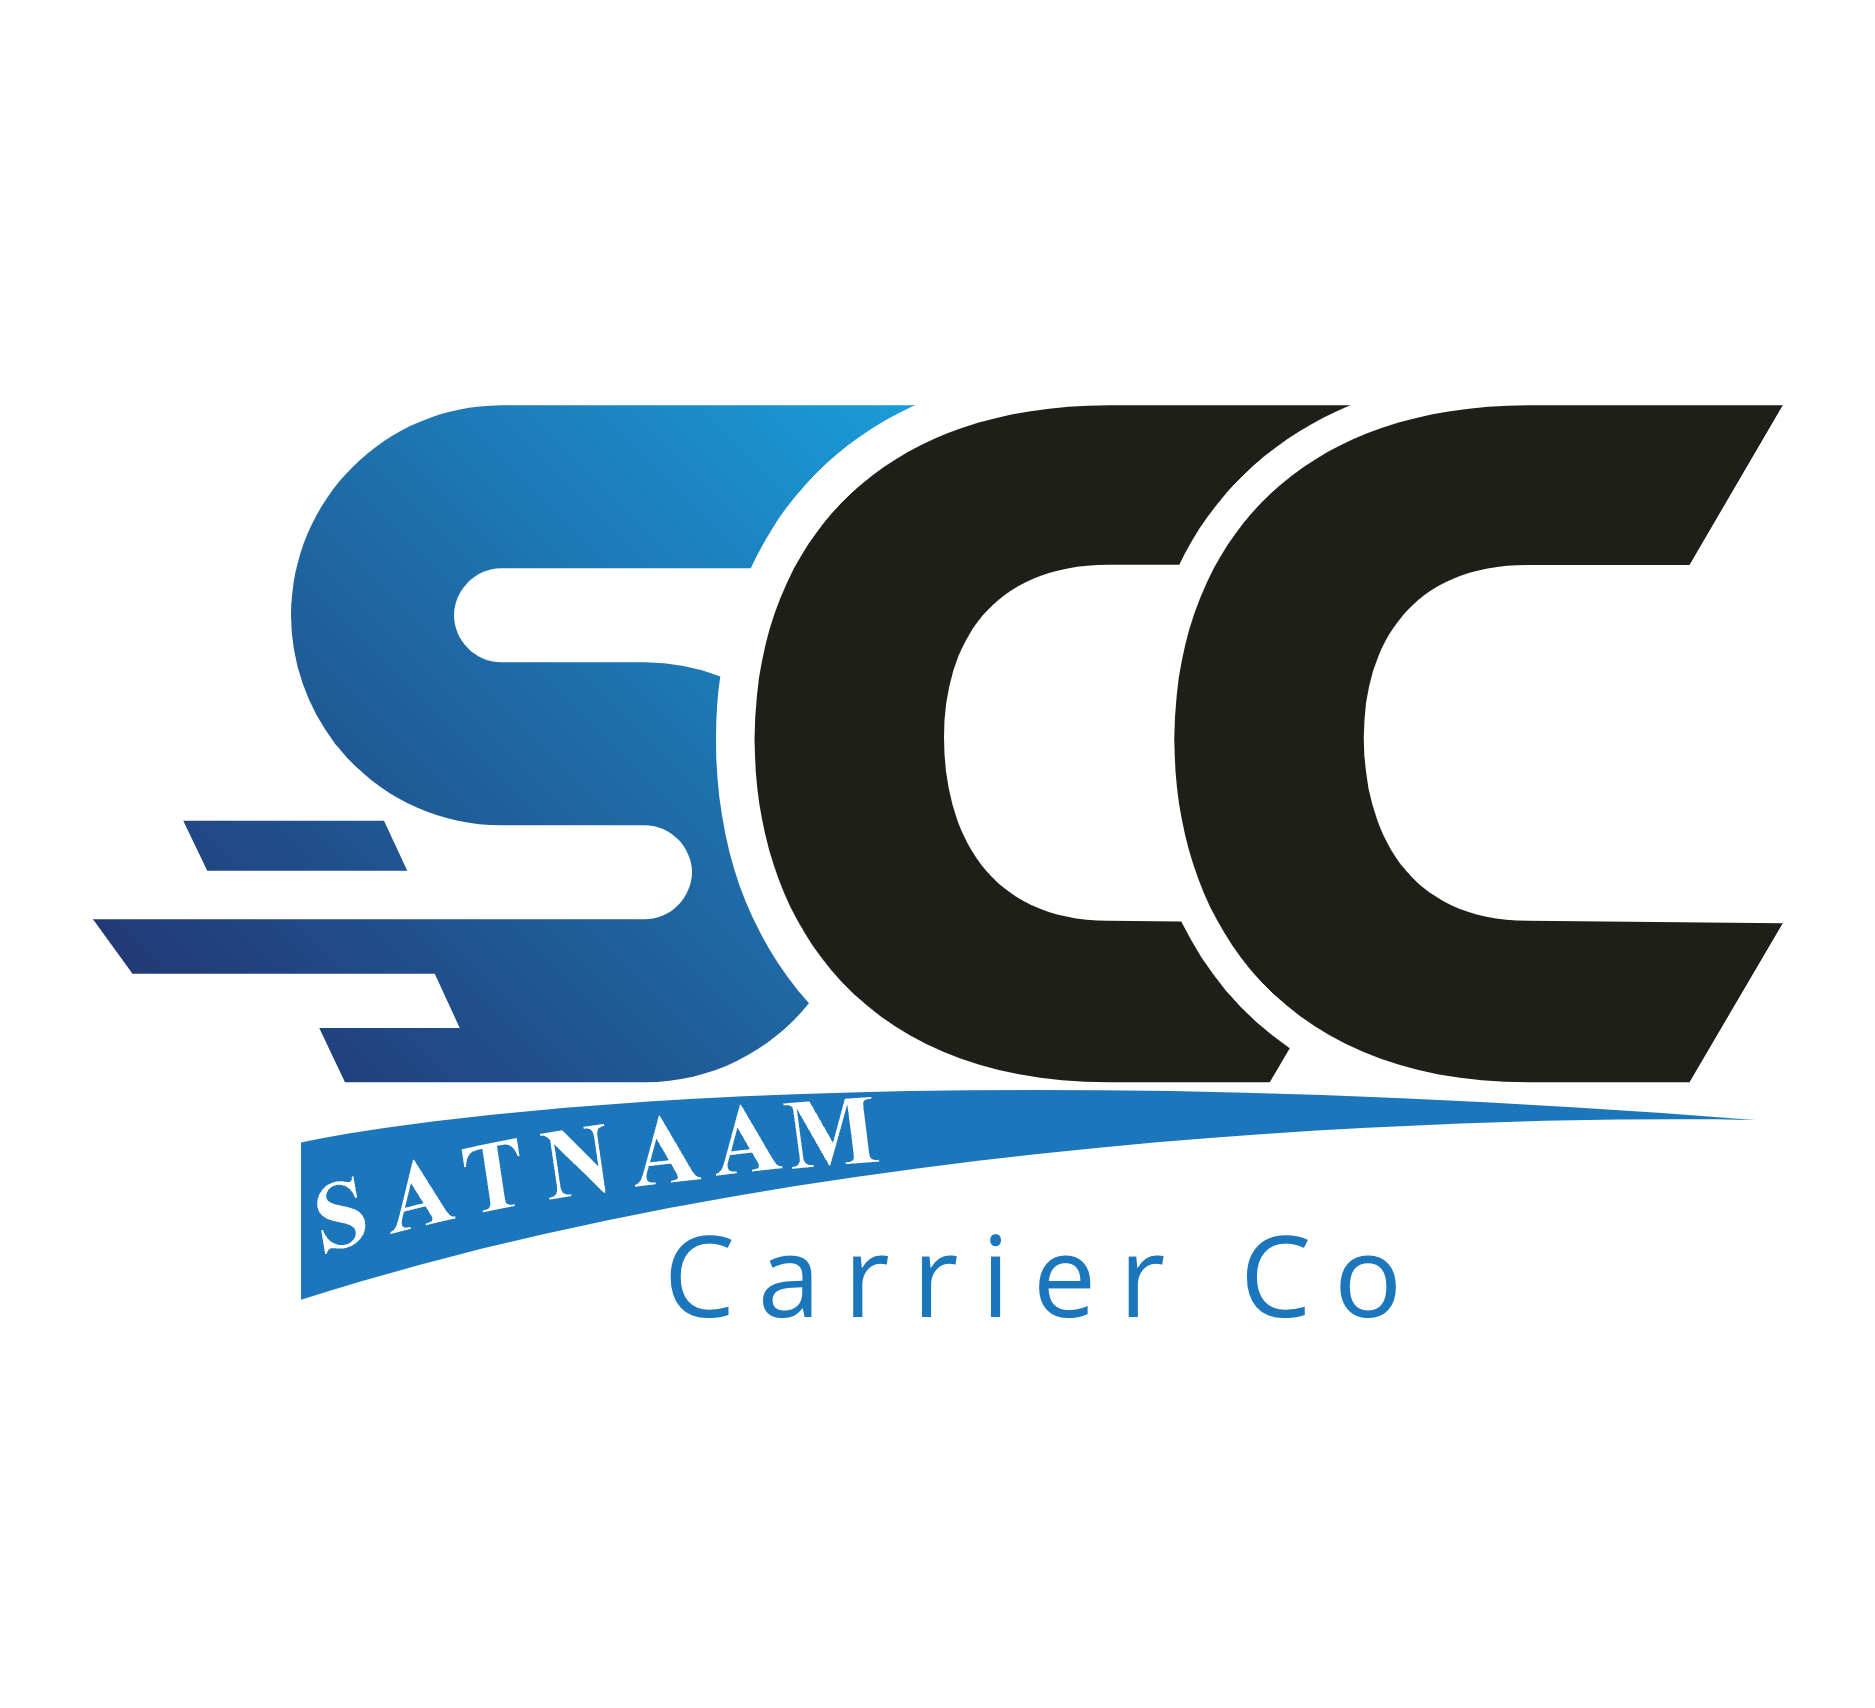 Satnam Carrier Co